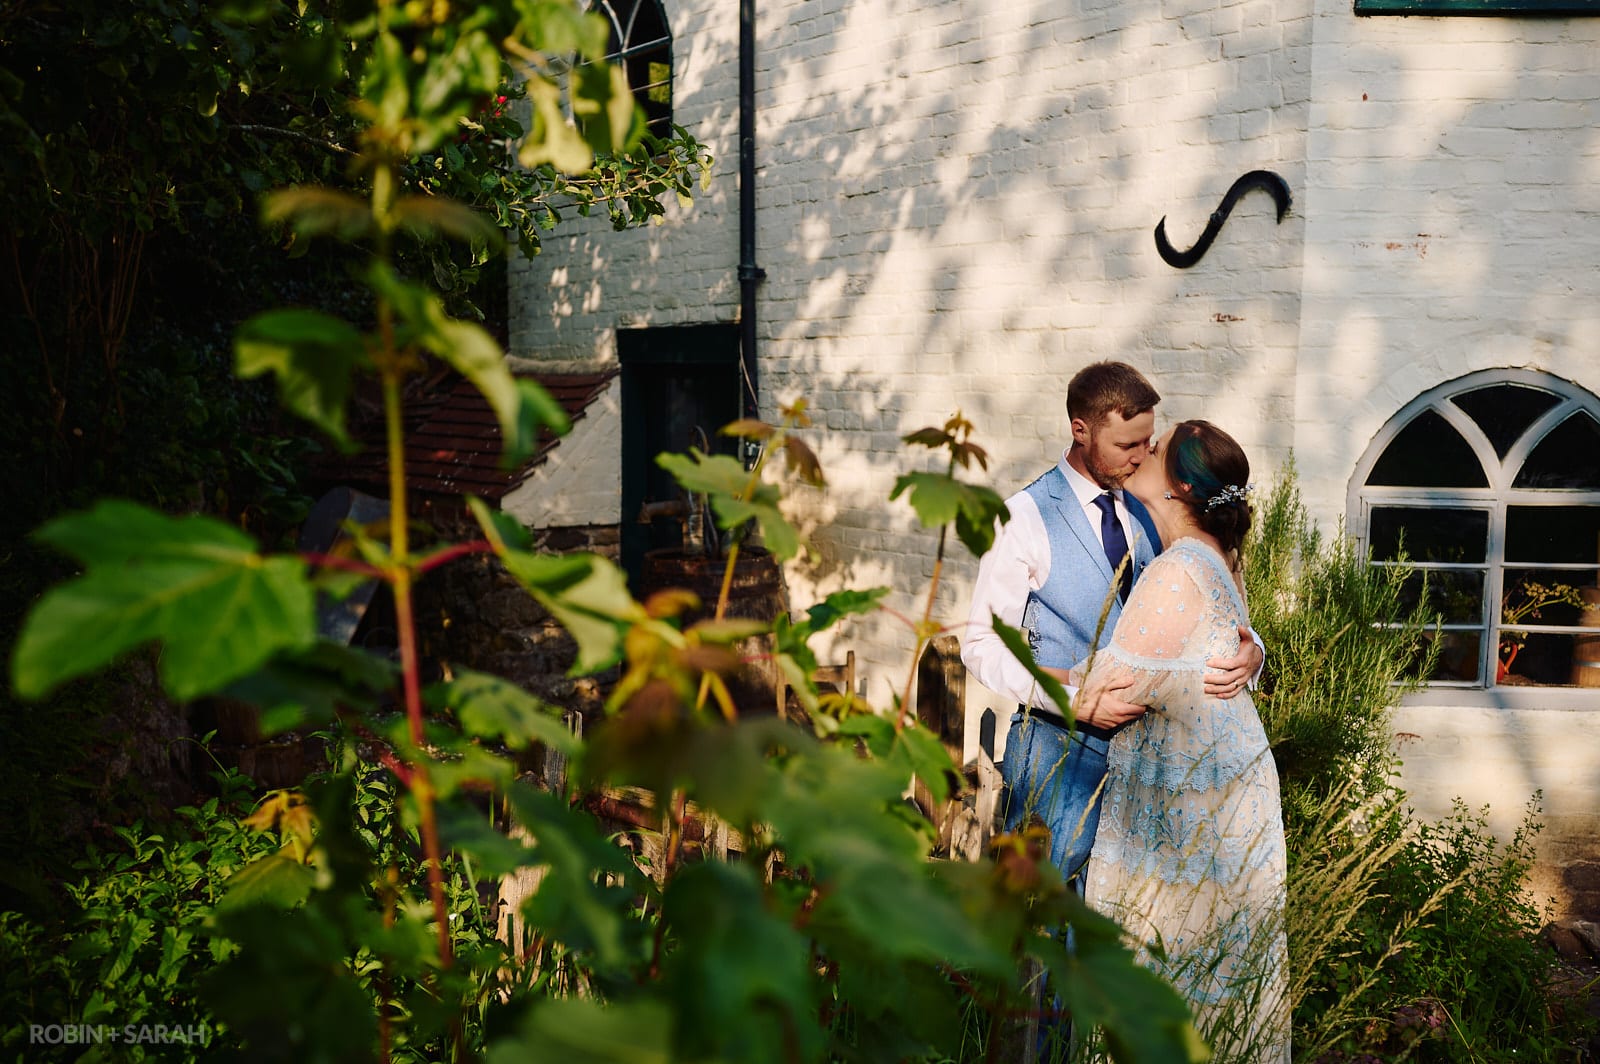 Bride and groom kiss in garden of old building